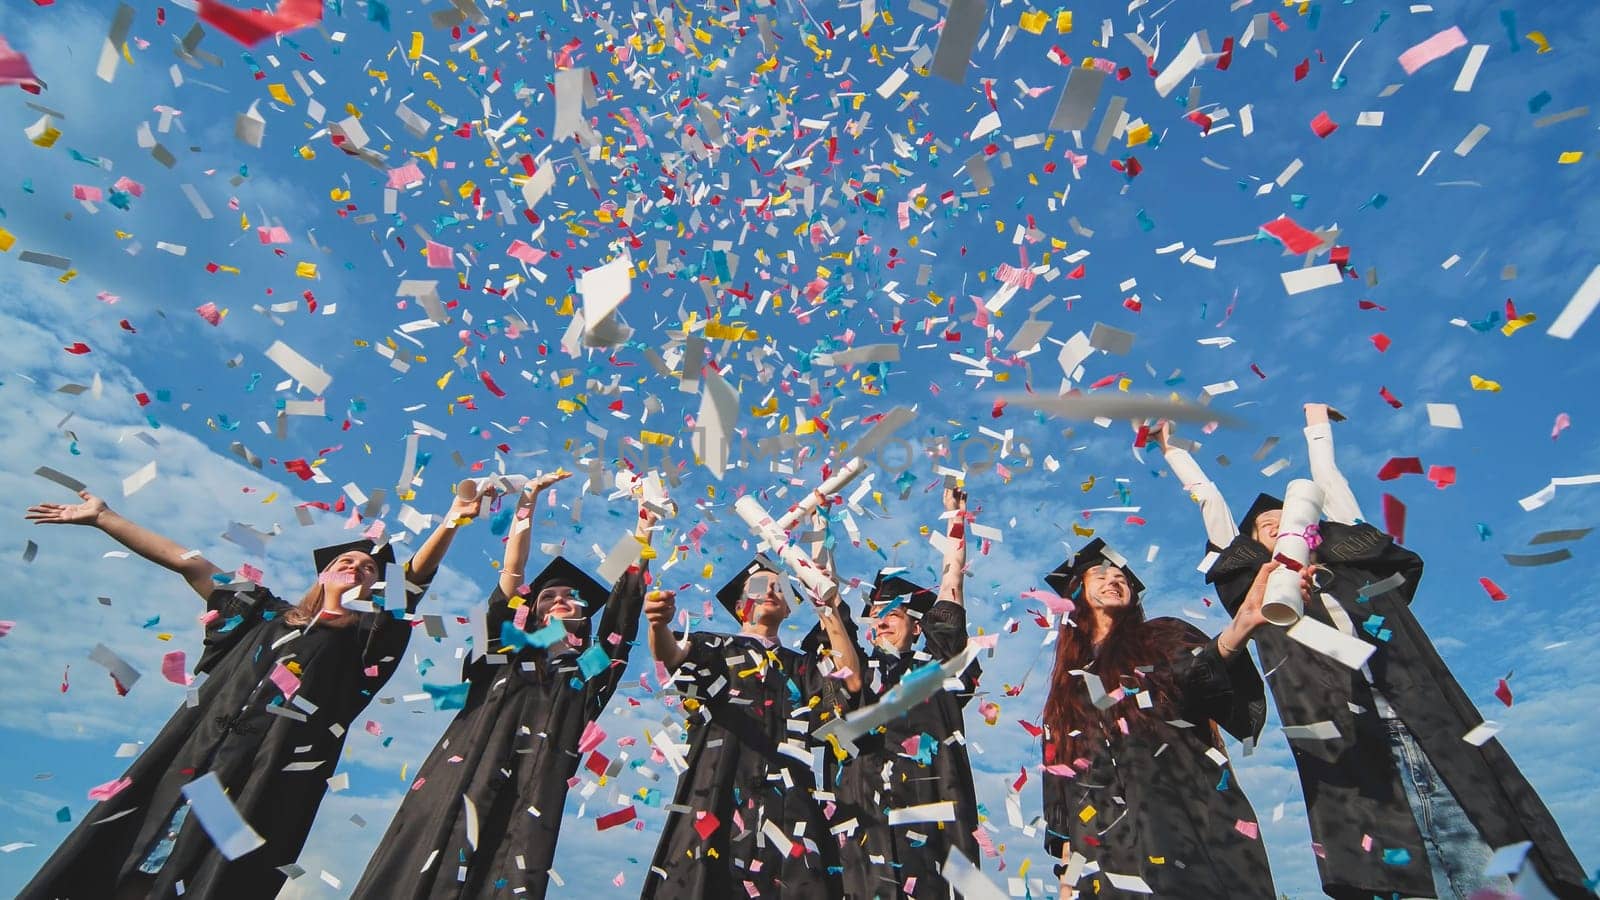 Happy graduates throw colorful confetti against a blue sky